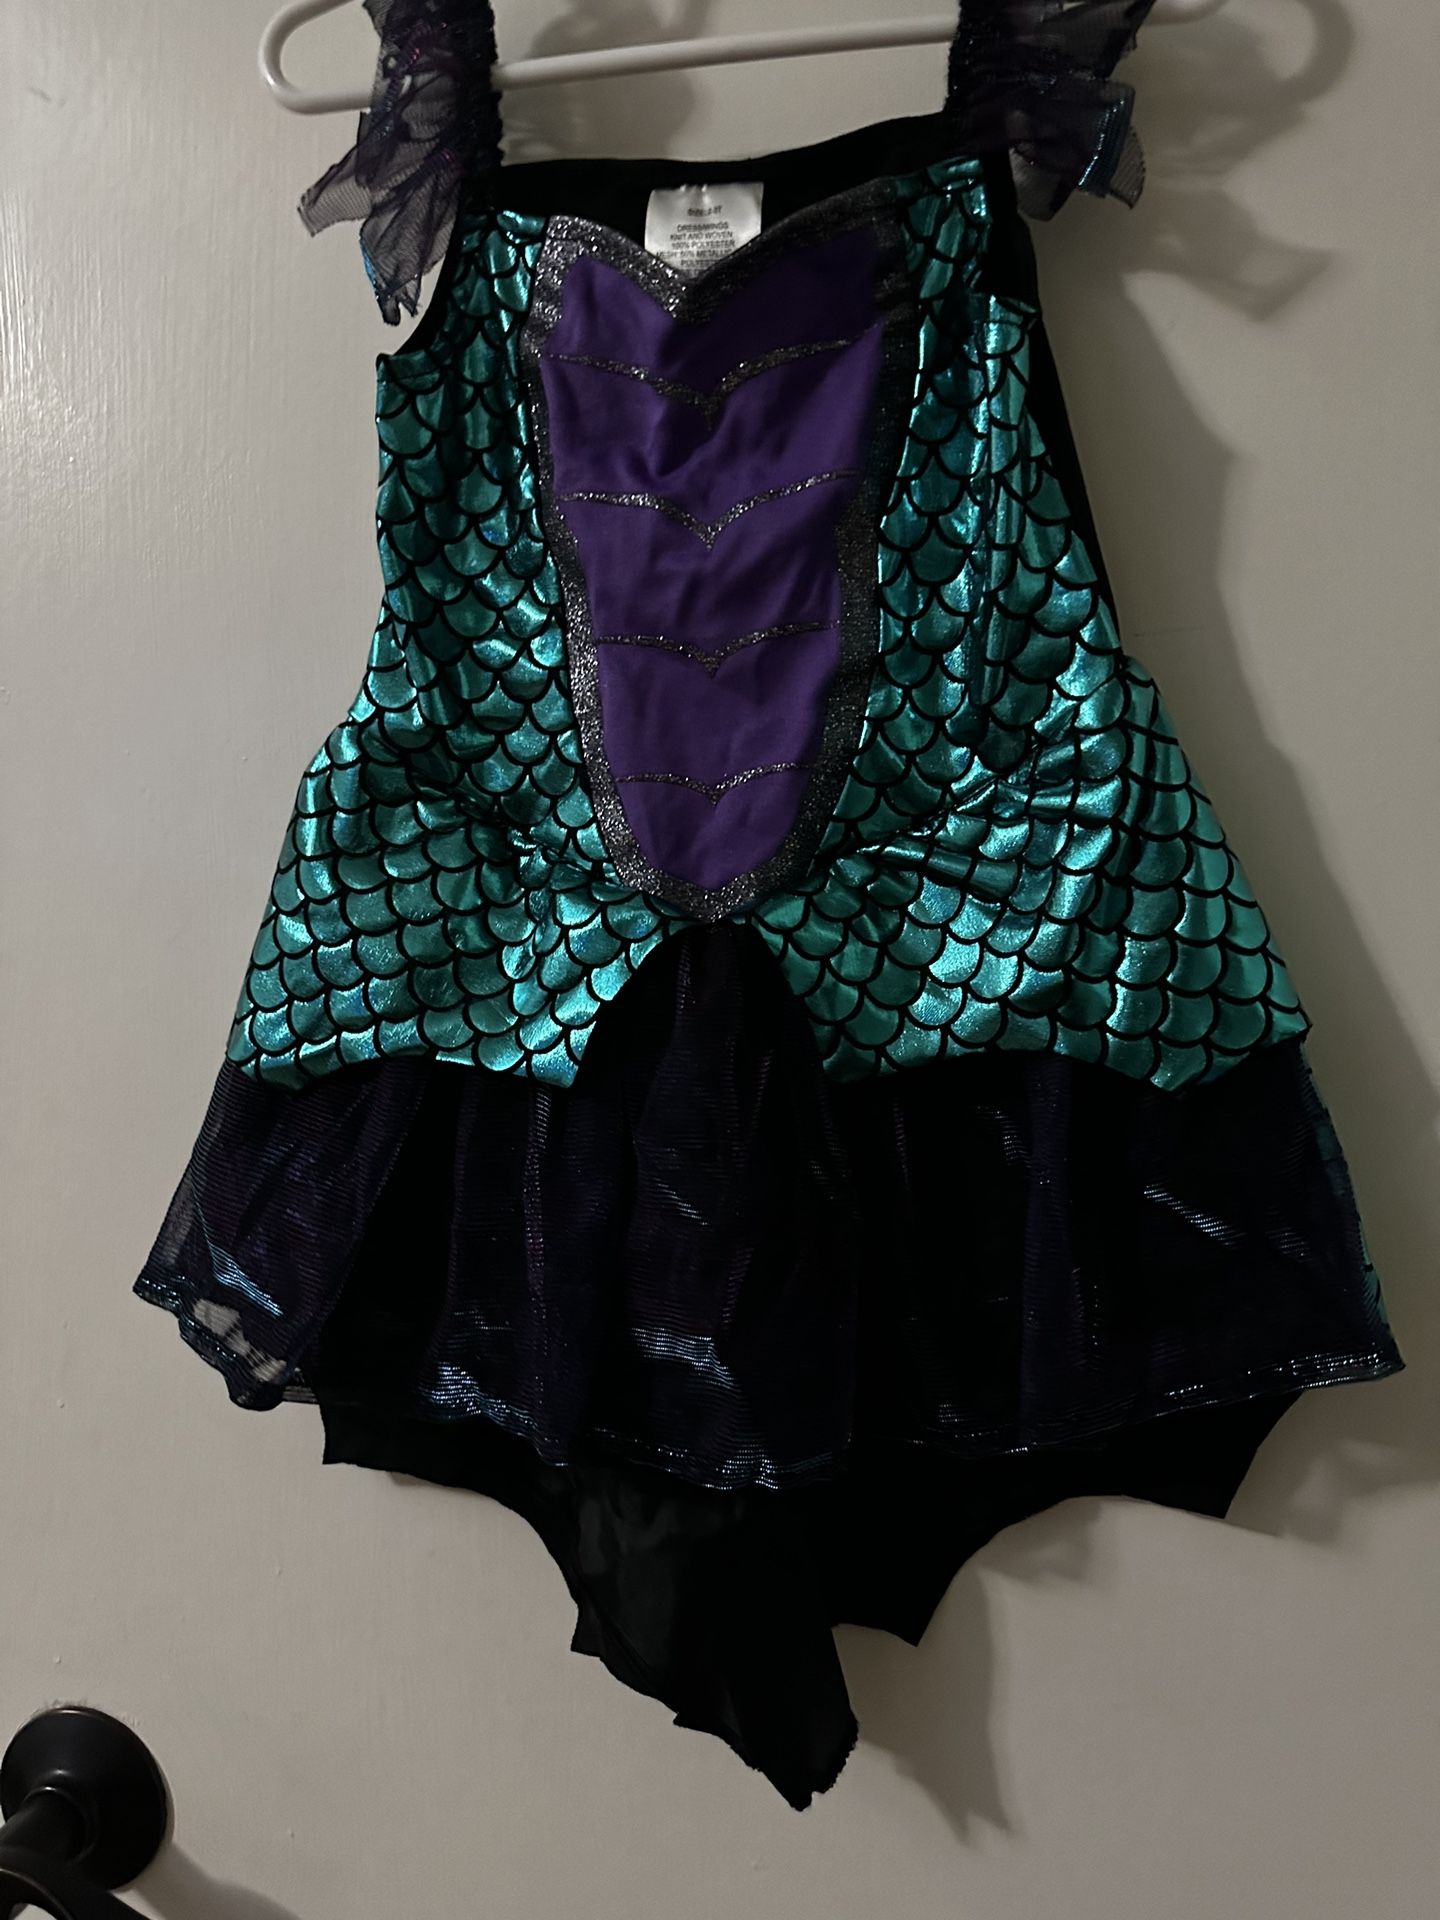 Mermaid Costume Dress 2t